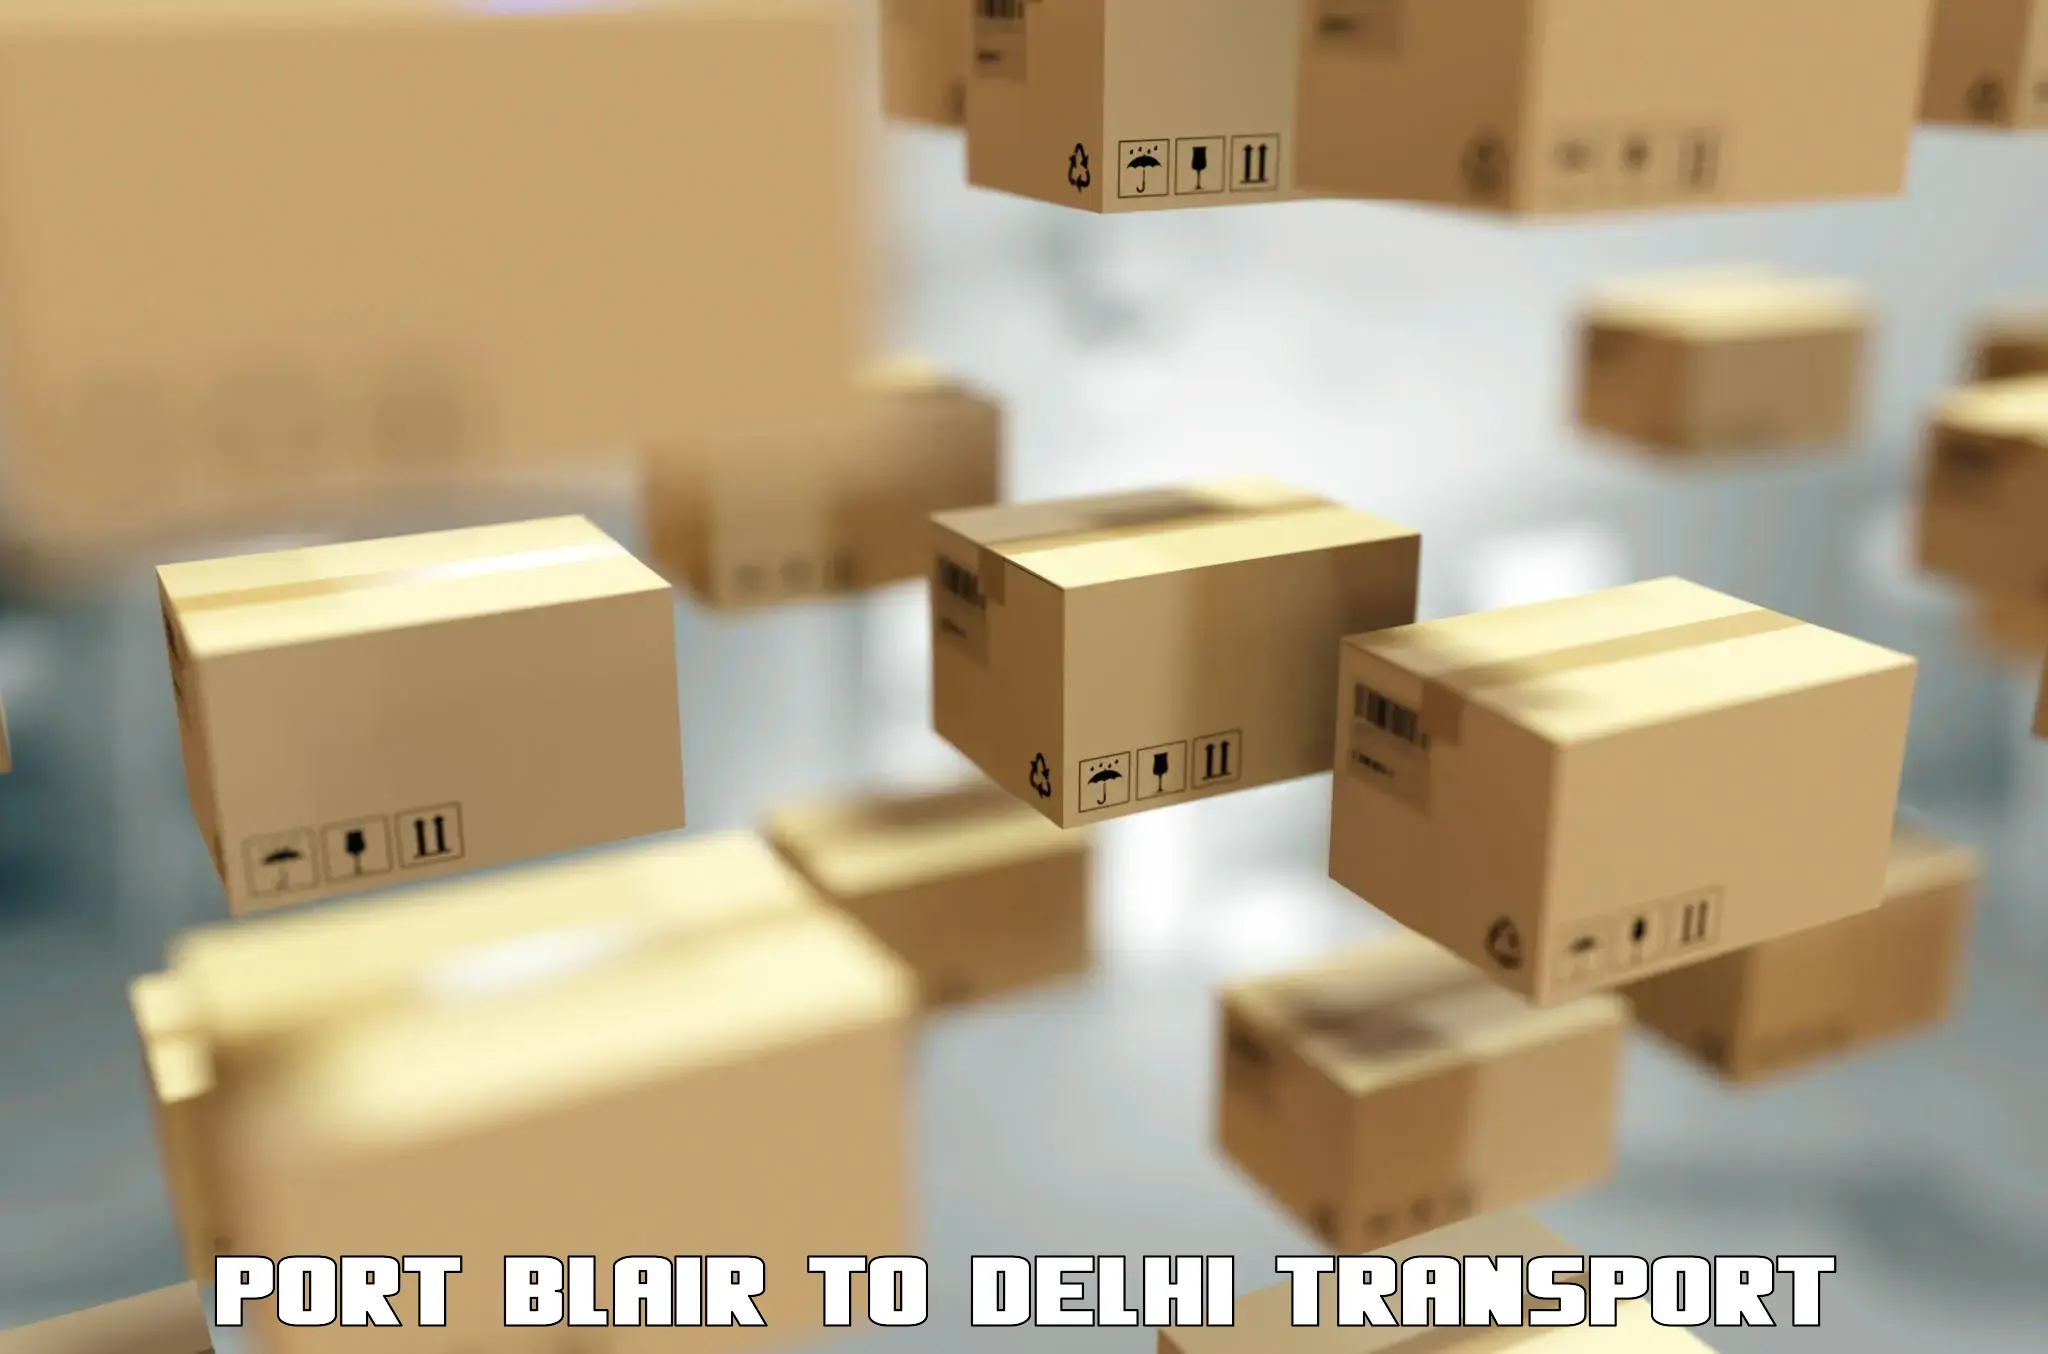 Bike transport service Port Blair to IIT Delhi